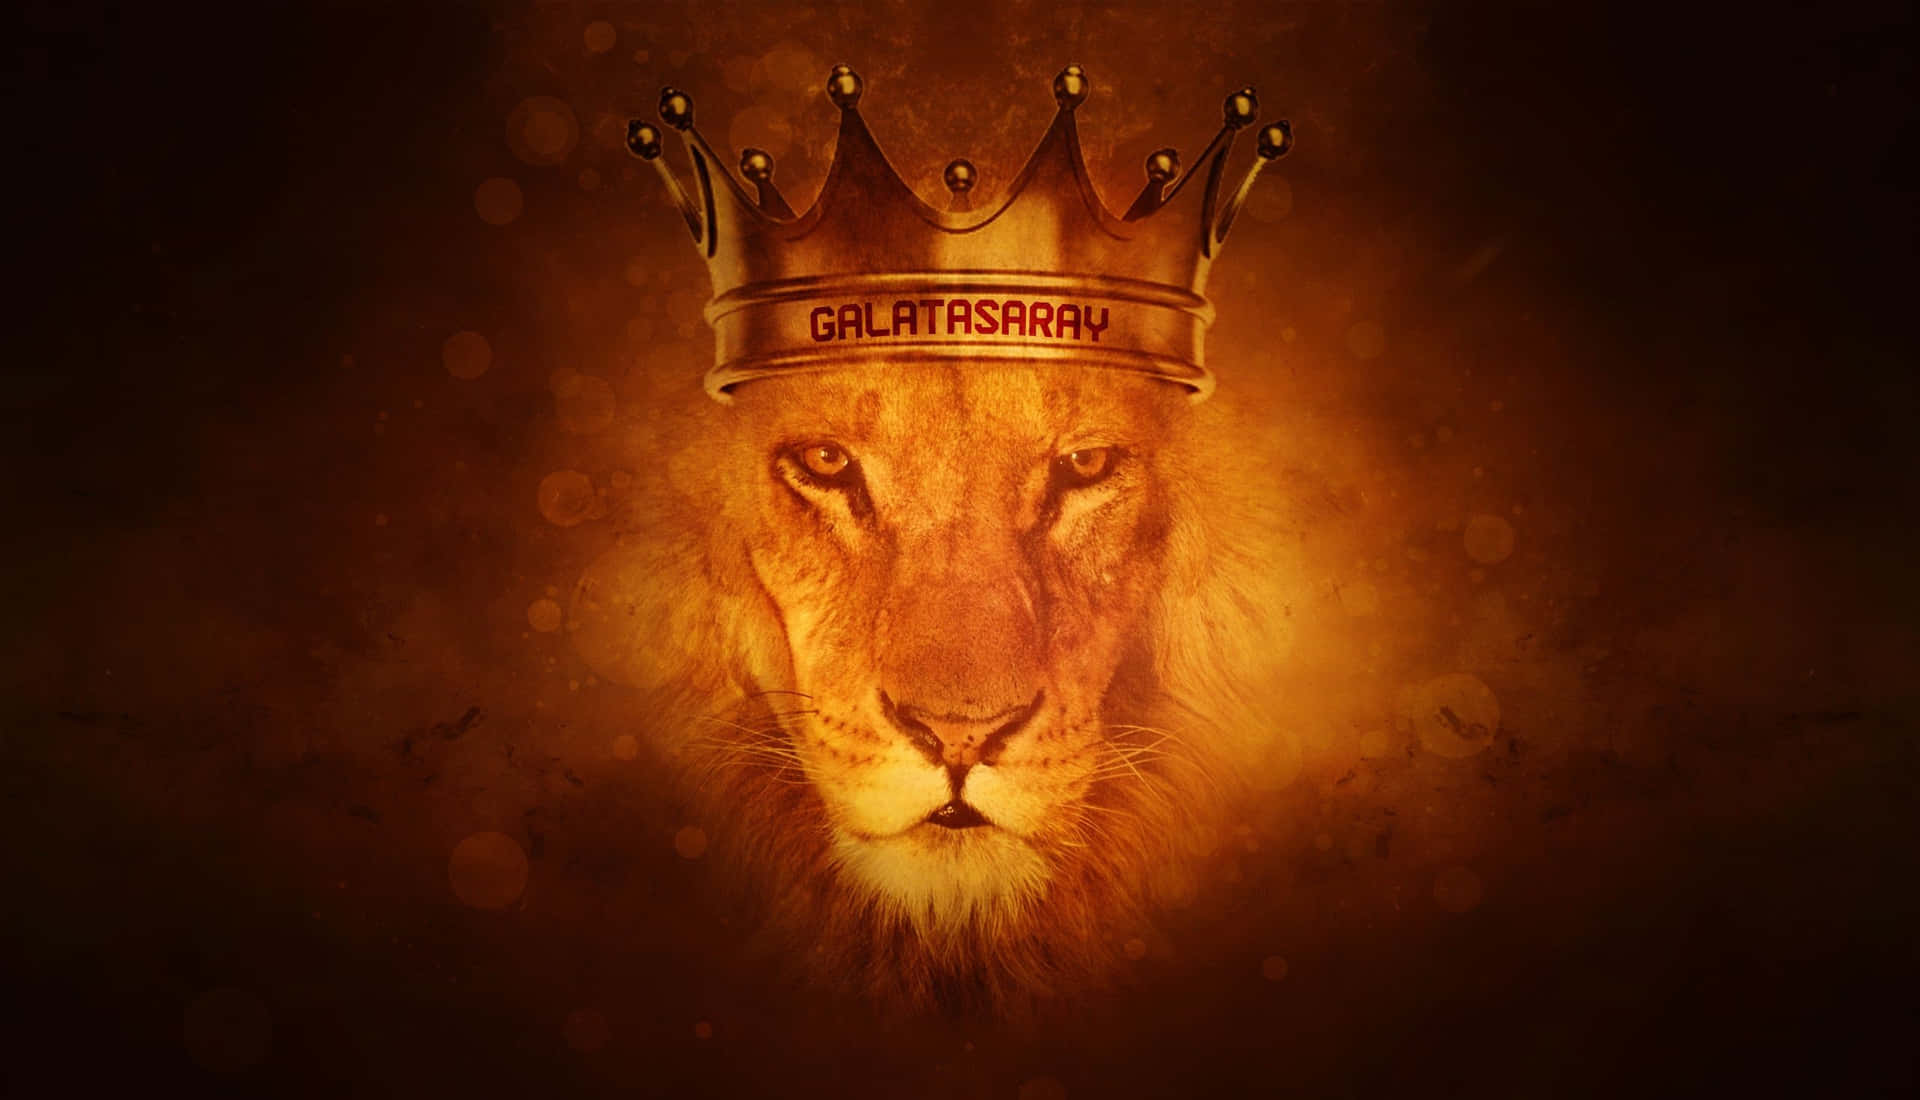 Majestic Lion Of Judah In A Vibrant Artistic Representation Wallpaper